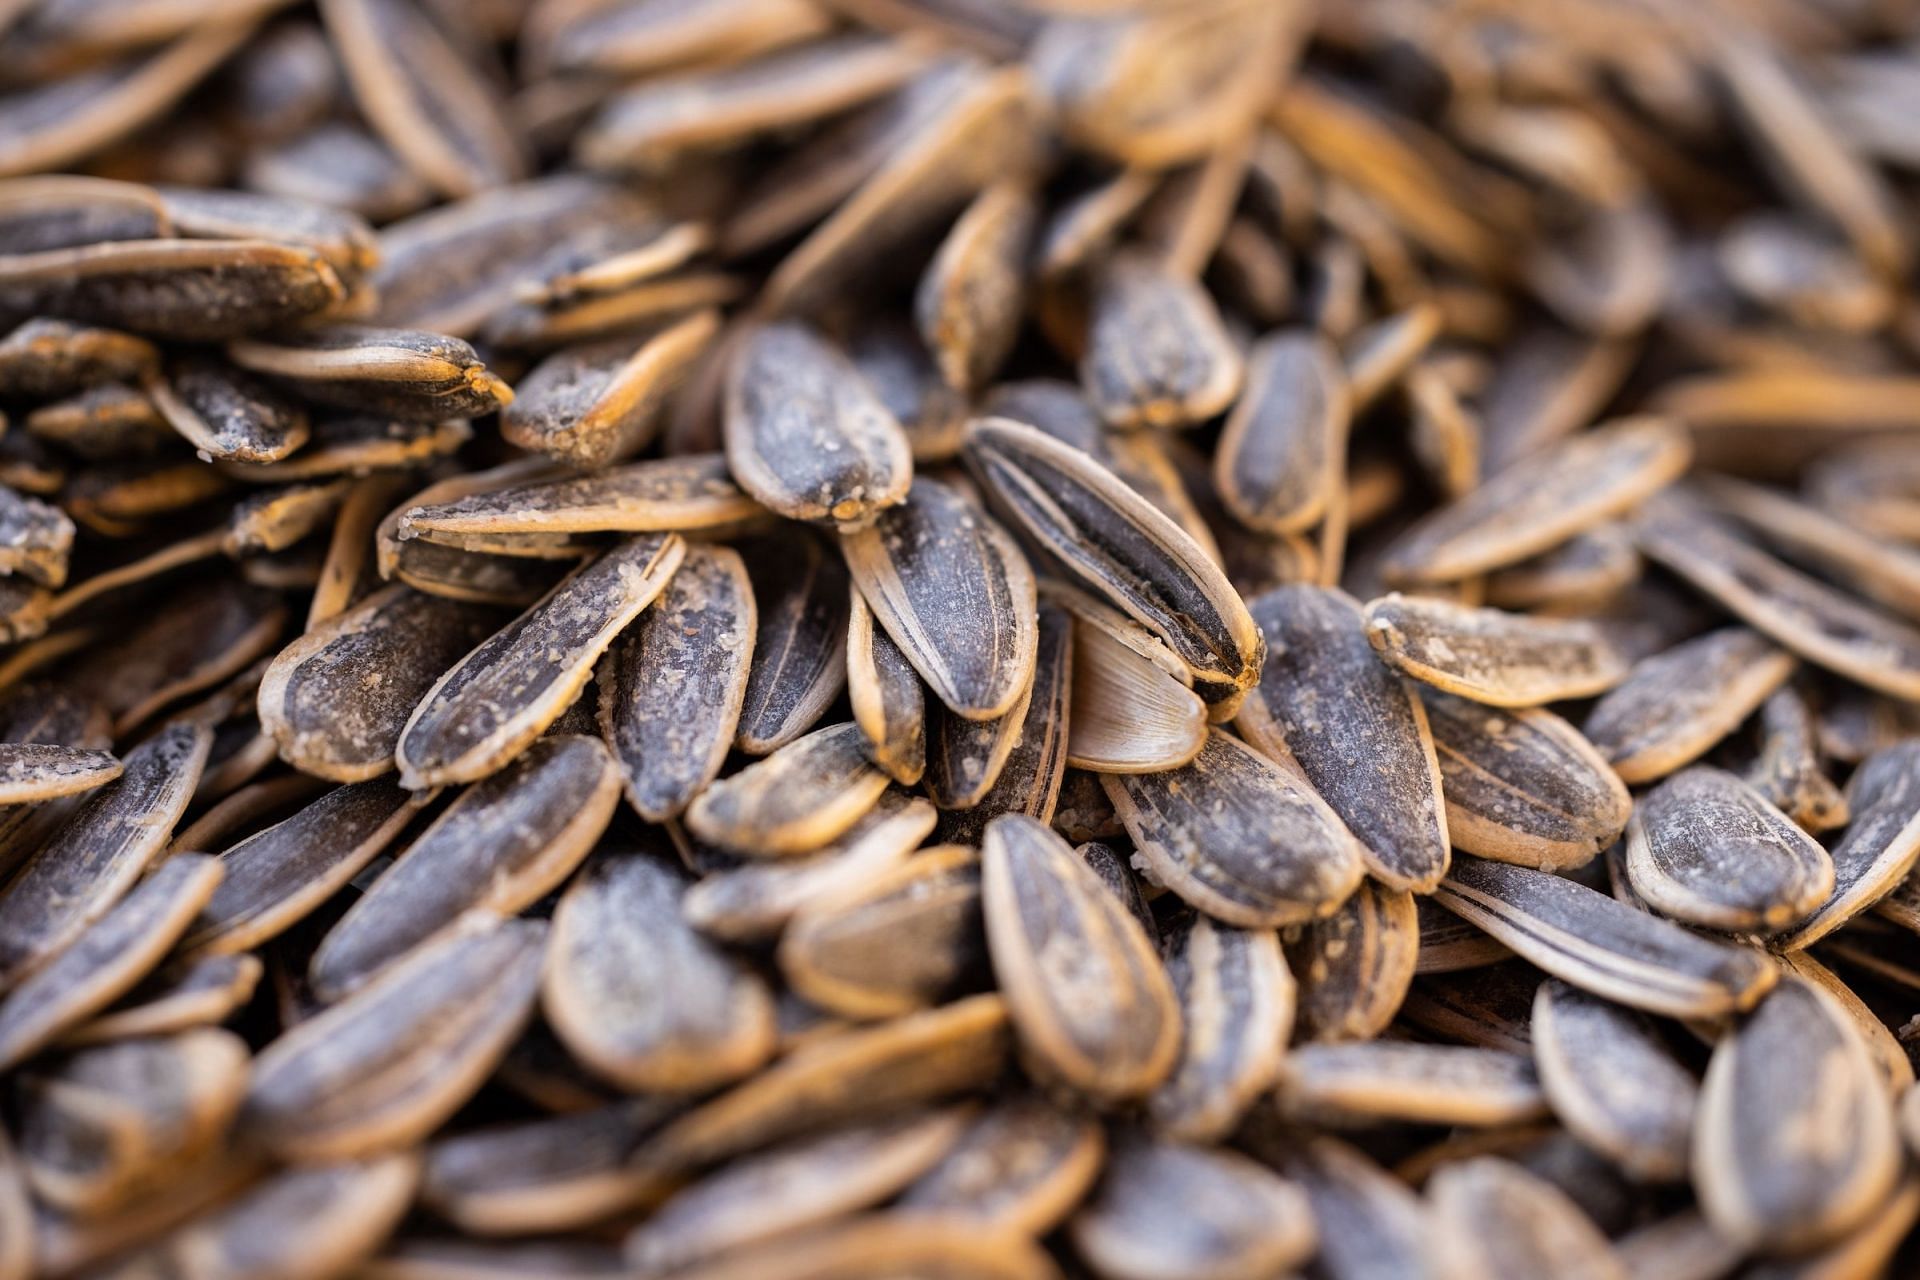 The nutrient content makes sunflower seeds healthy. (Image via Unsplash/engin akyurt)